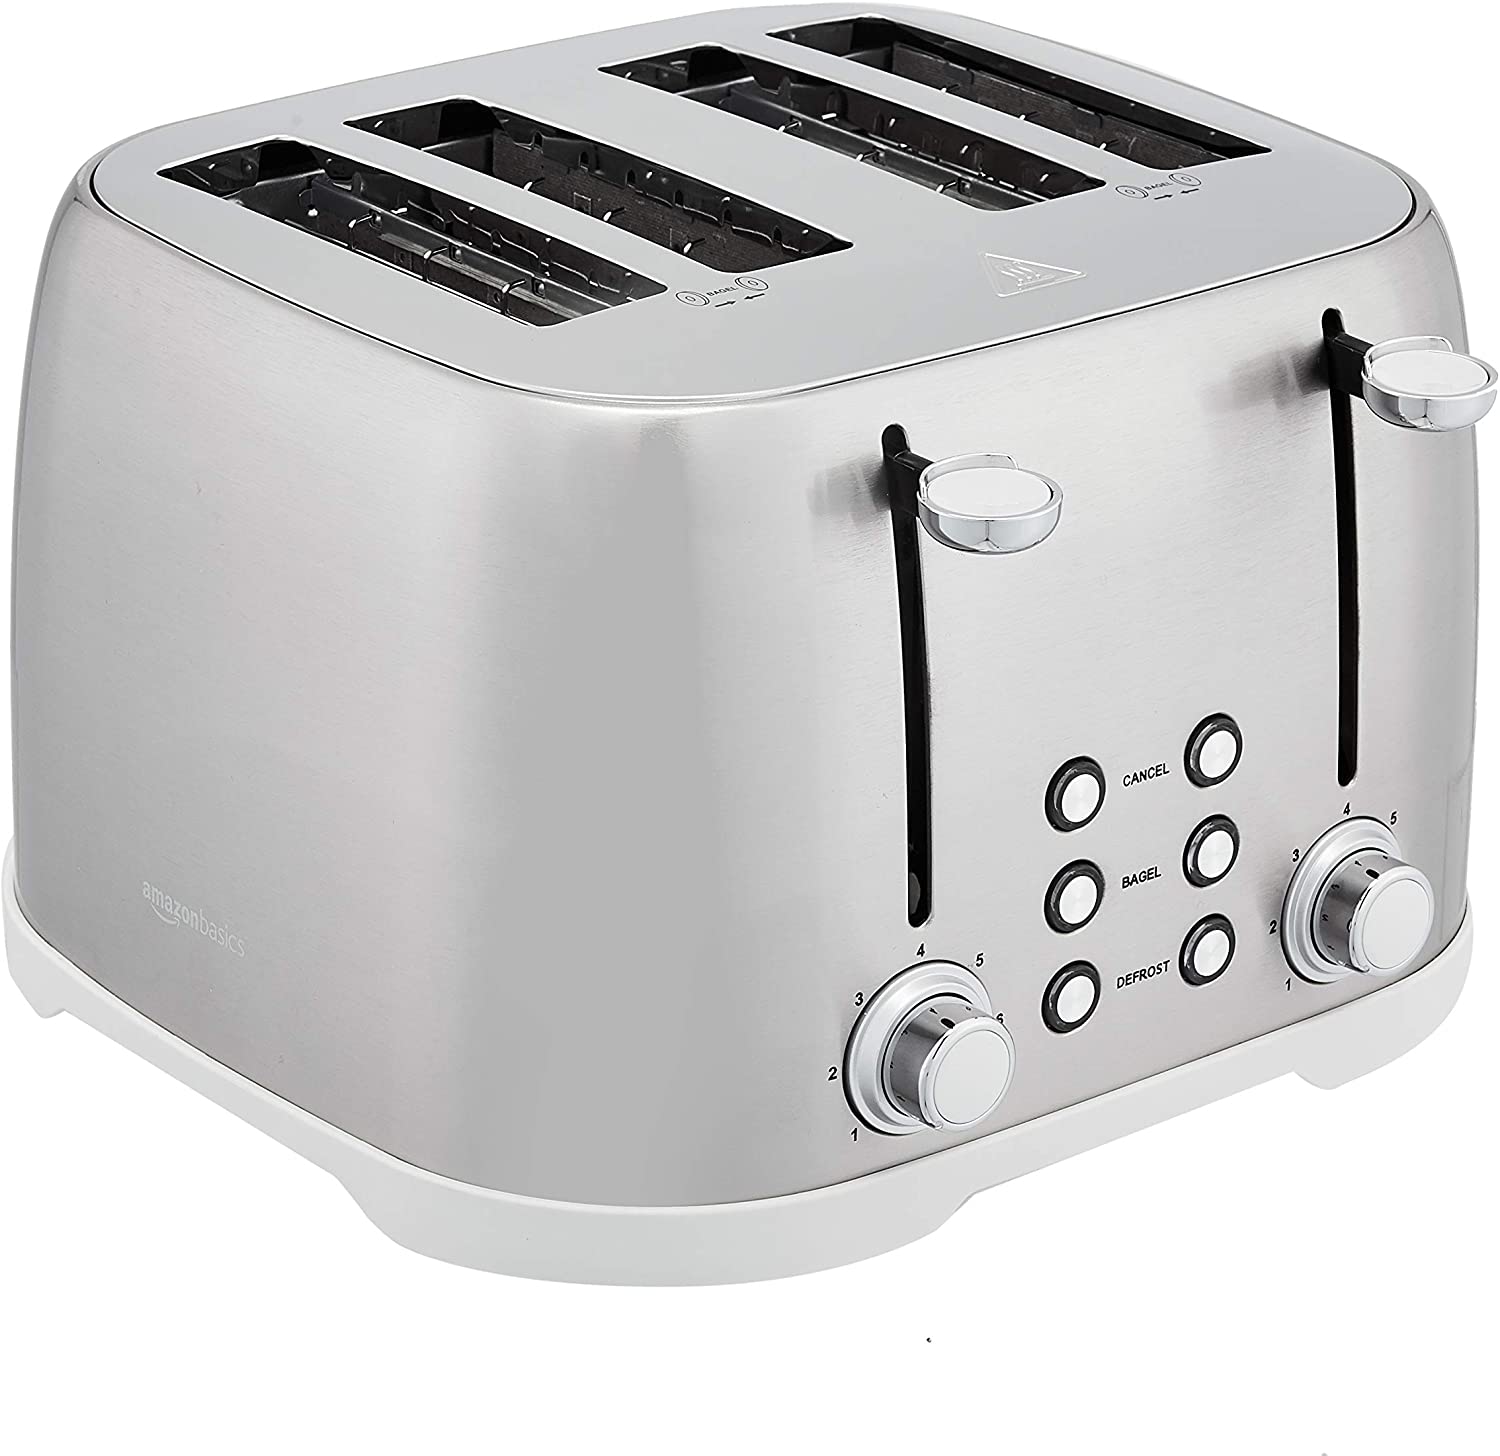 https://www.dontwasteyourmoney.com/wp-content/uploads/2020/10/amazonbasics-2-slot-toaster.jpg